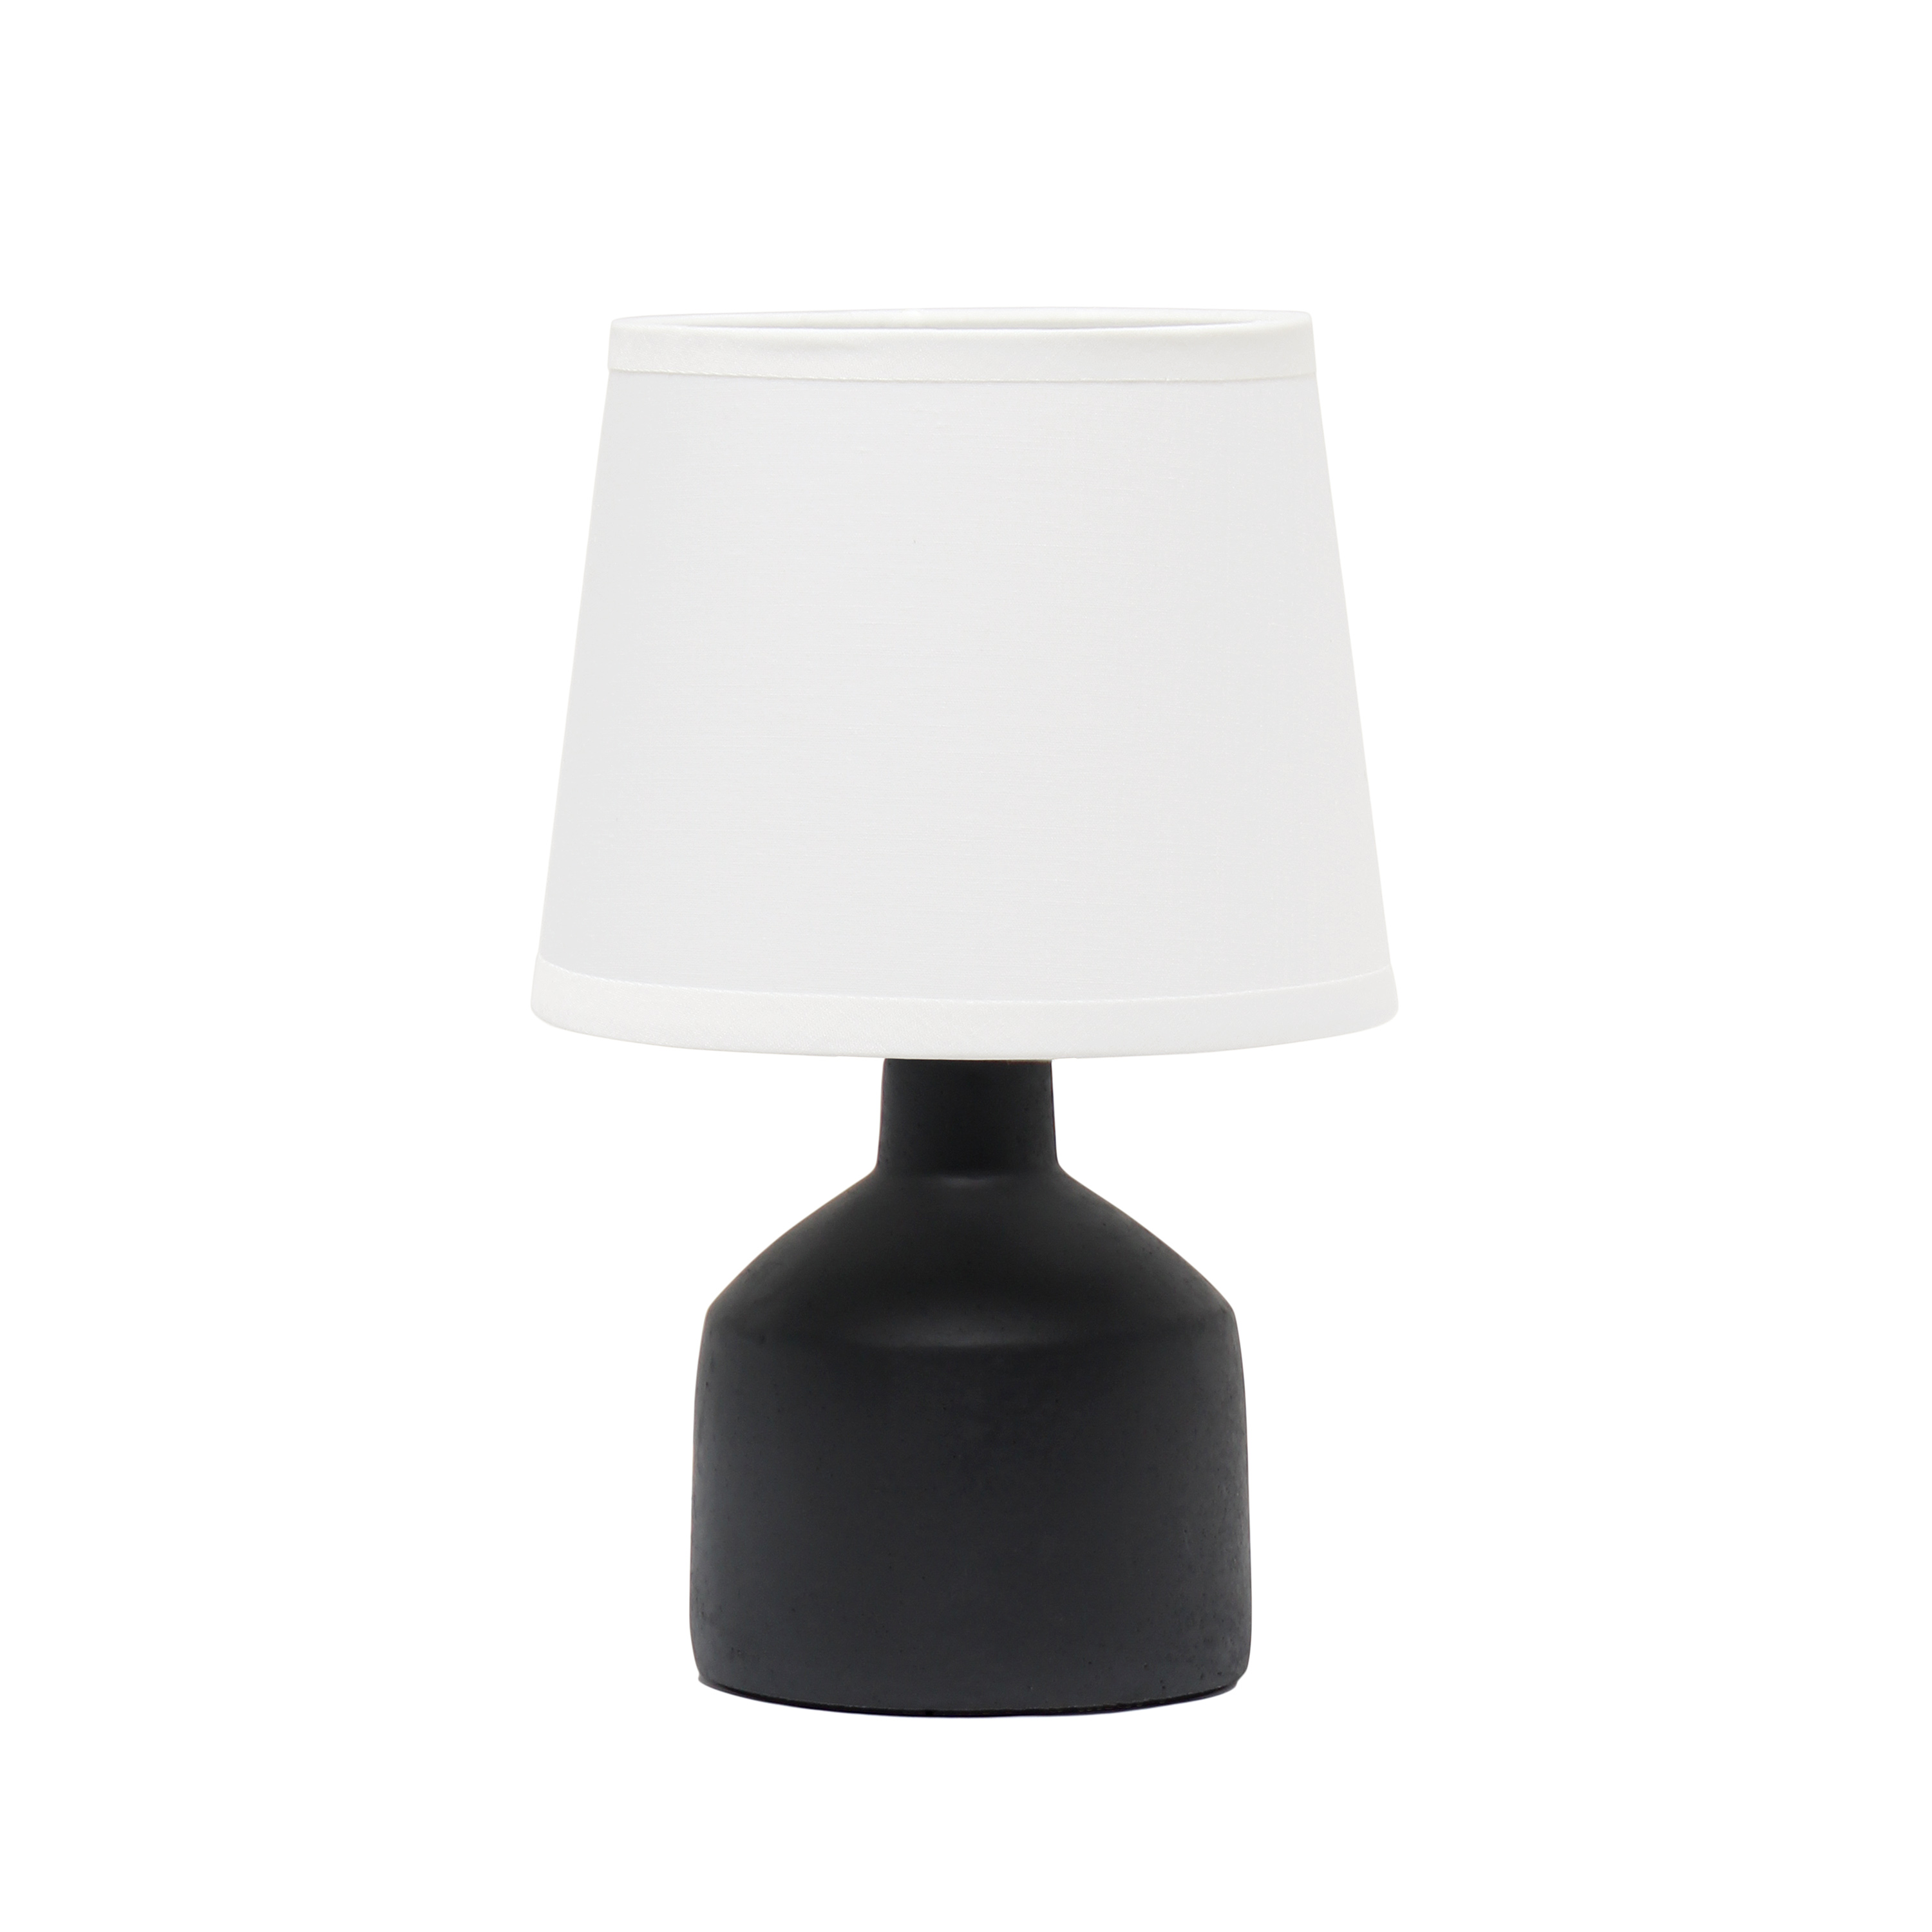 Simple Designs Mini Bocksbeutal Ceramic Table Lamp, Black